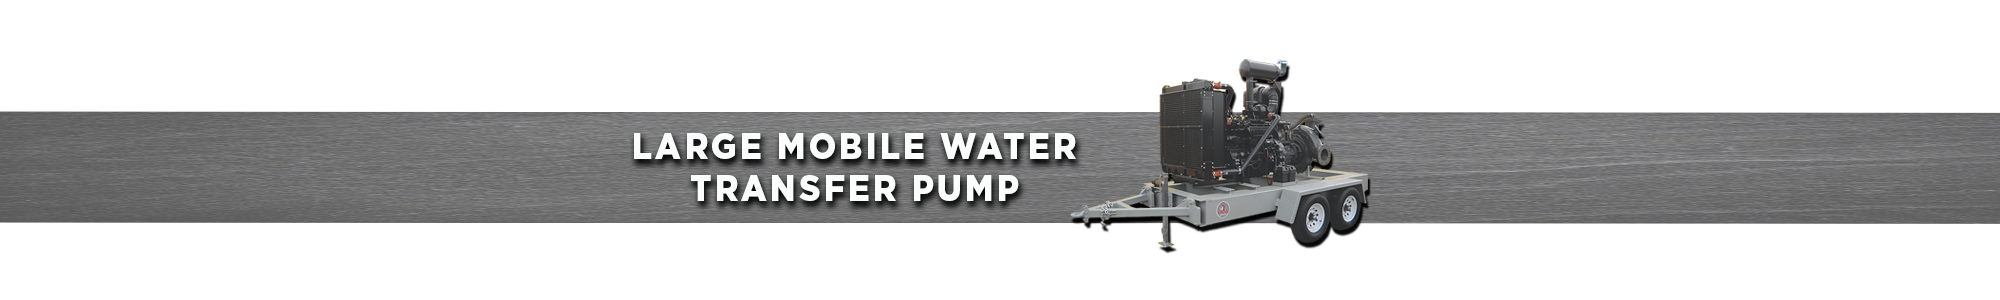 Large Mobile Water Transfer Pump